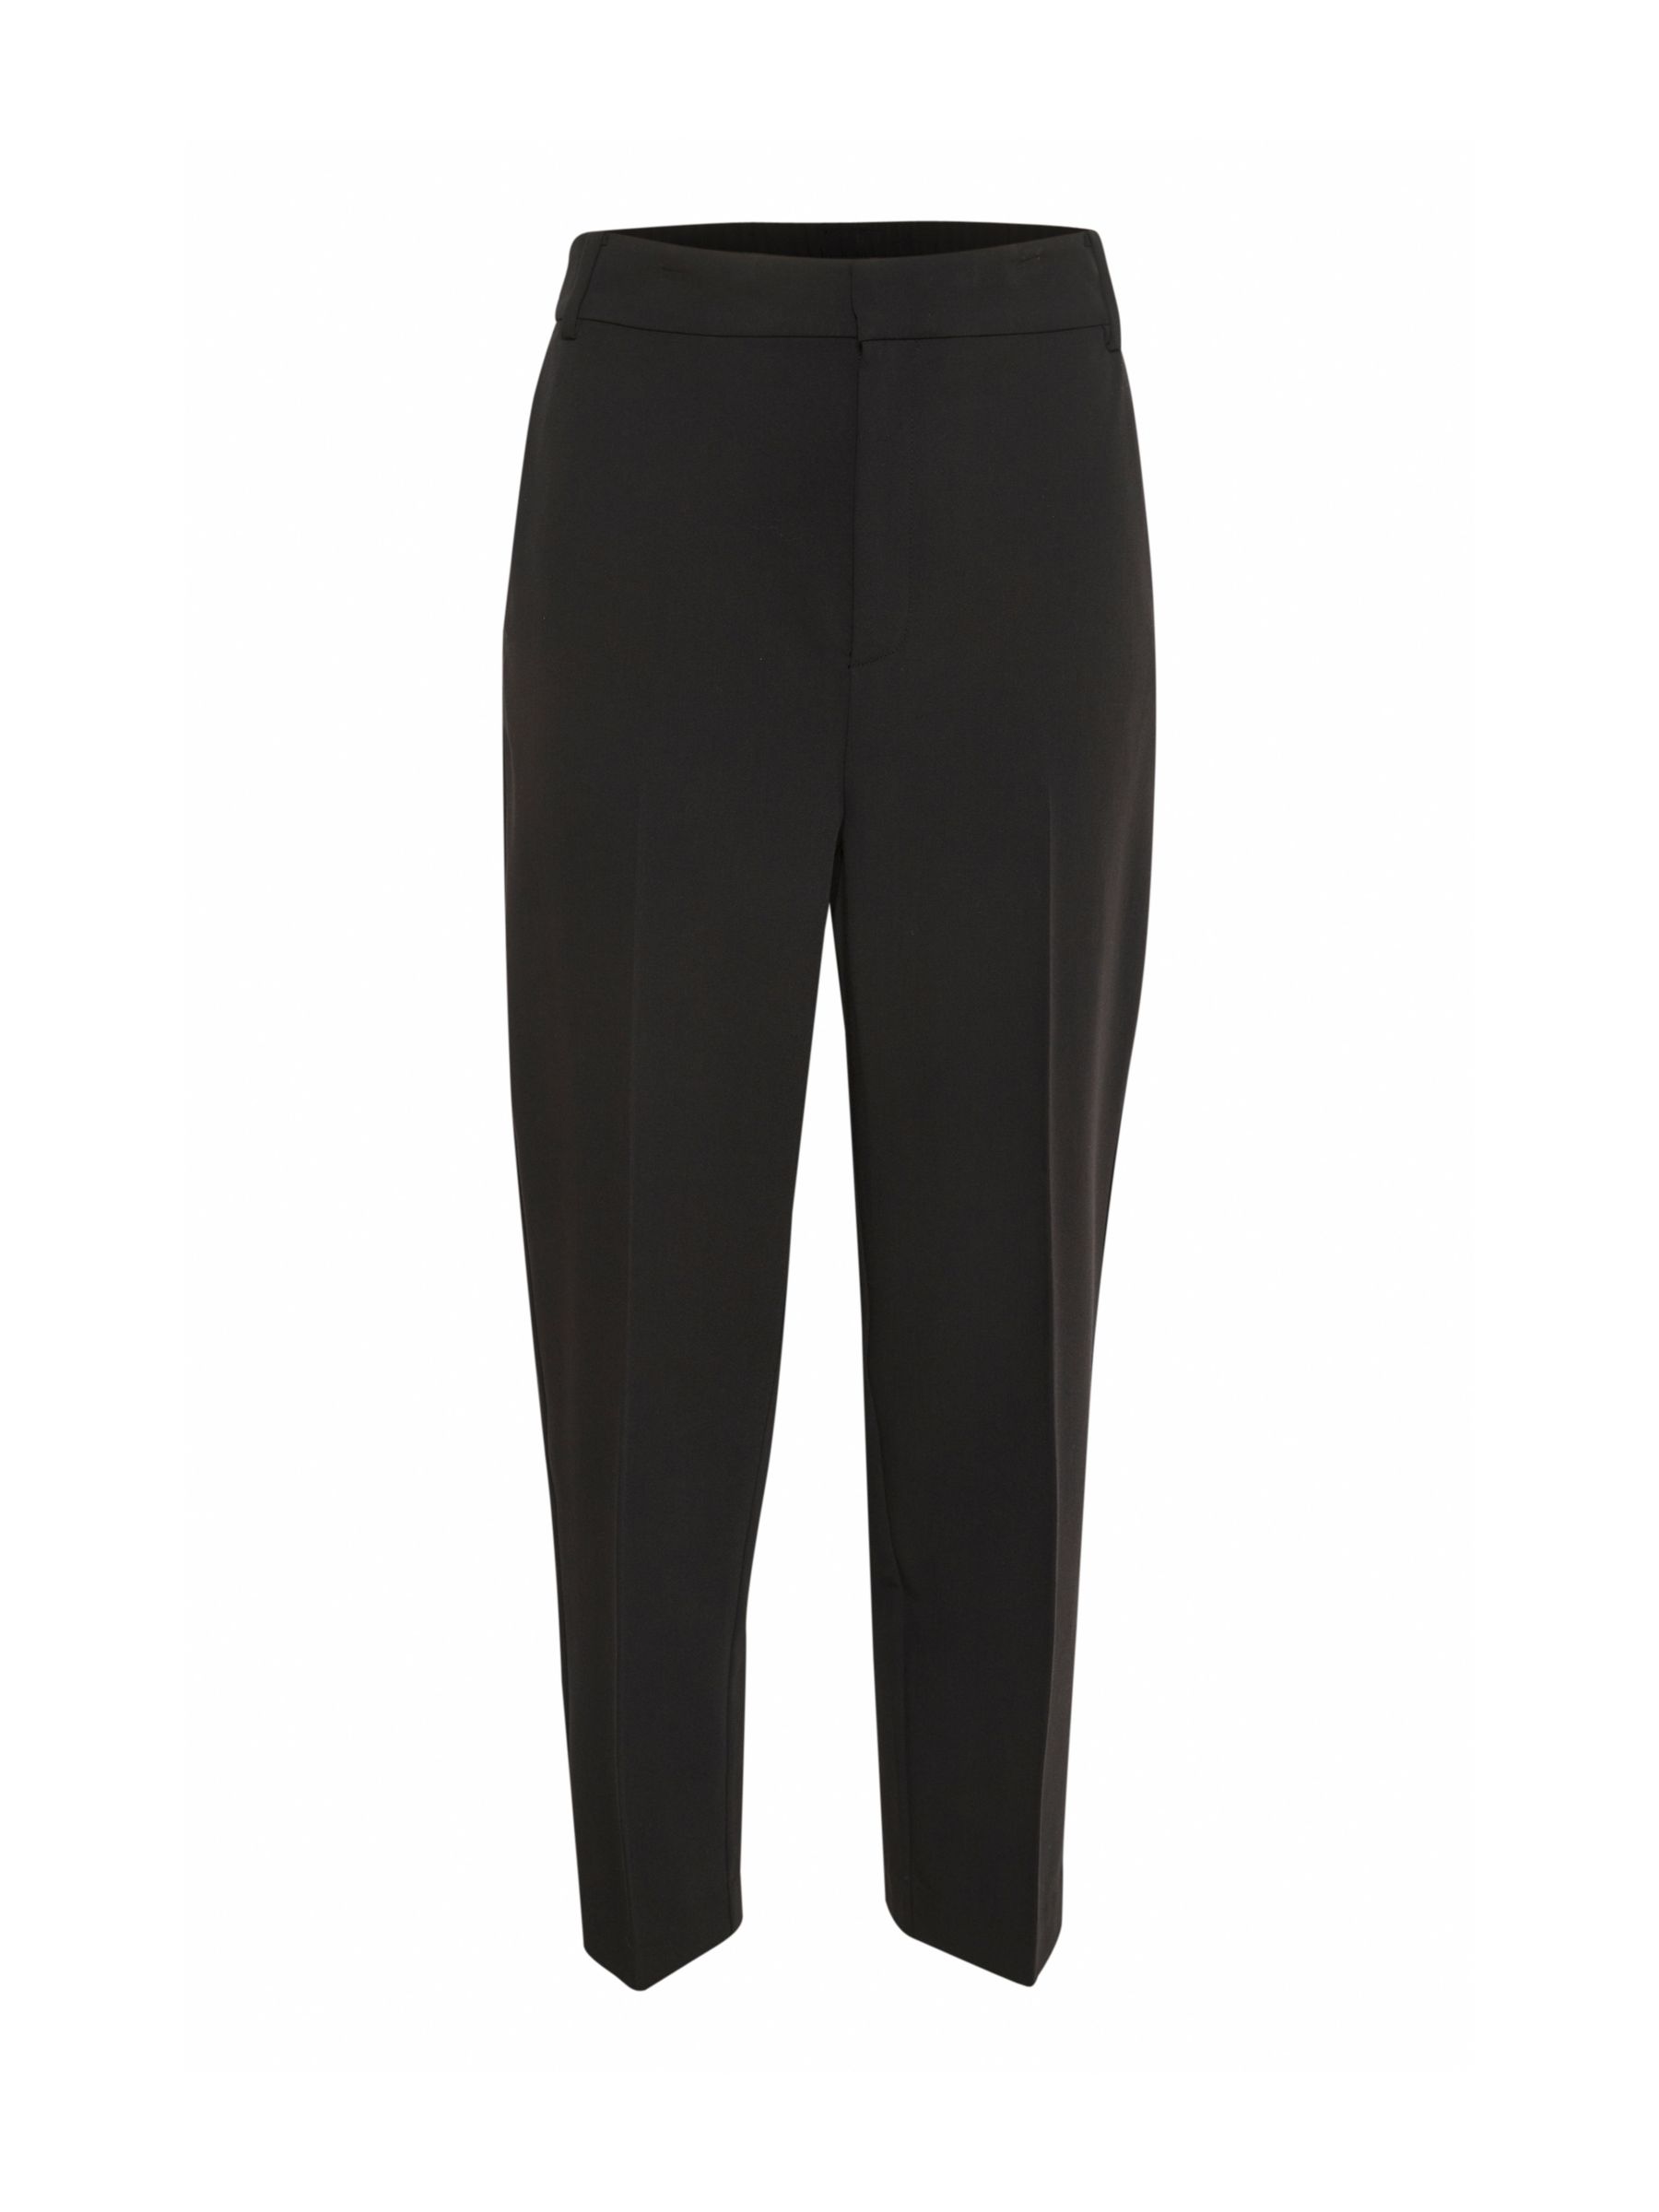 Buy InWear Naxa Trousers, Black Online at johnlewis.com